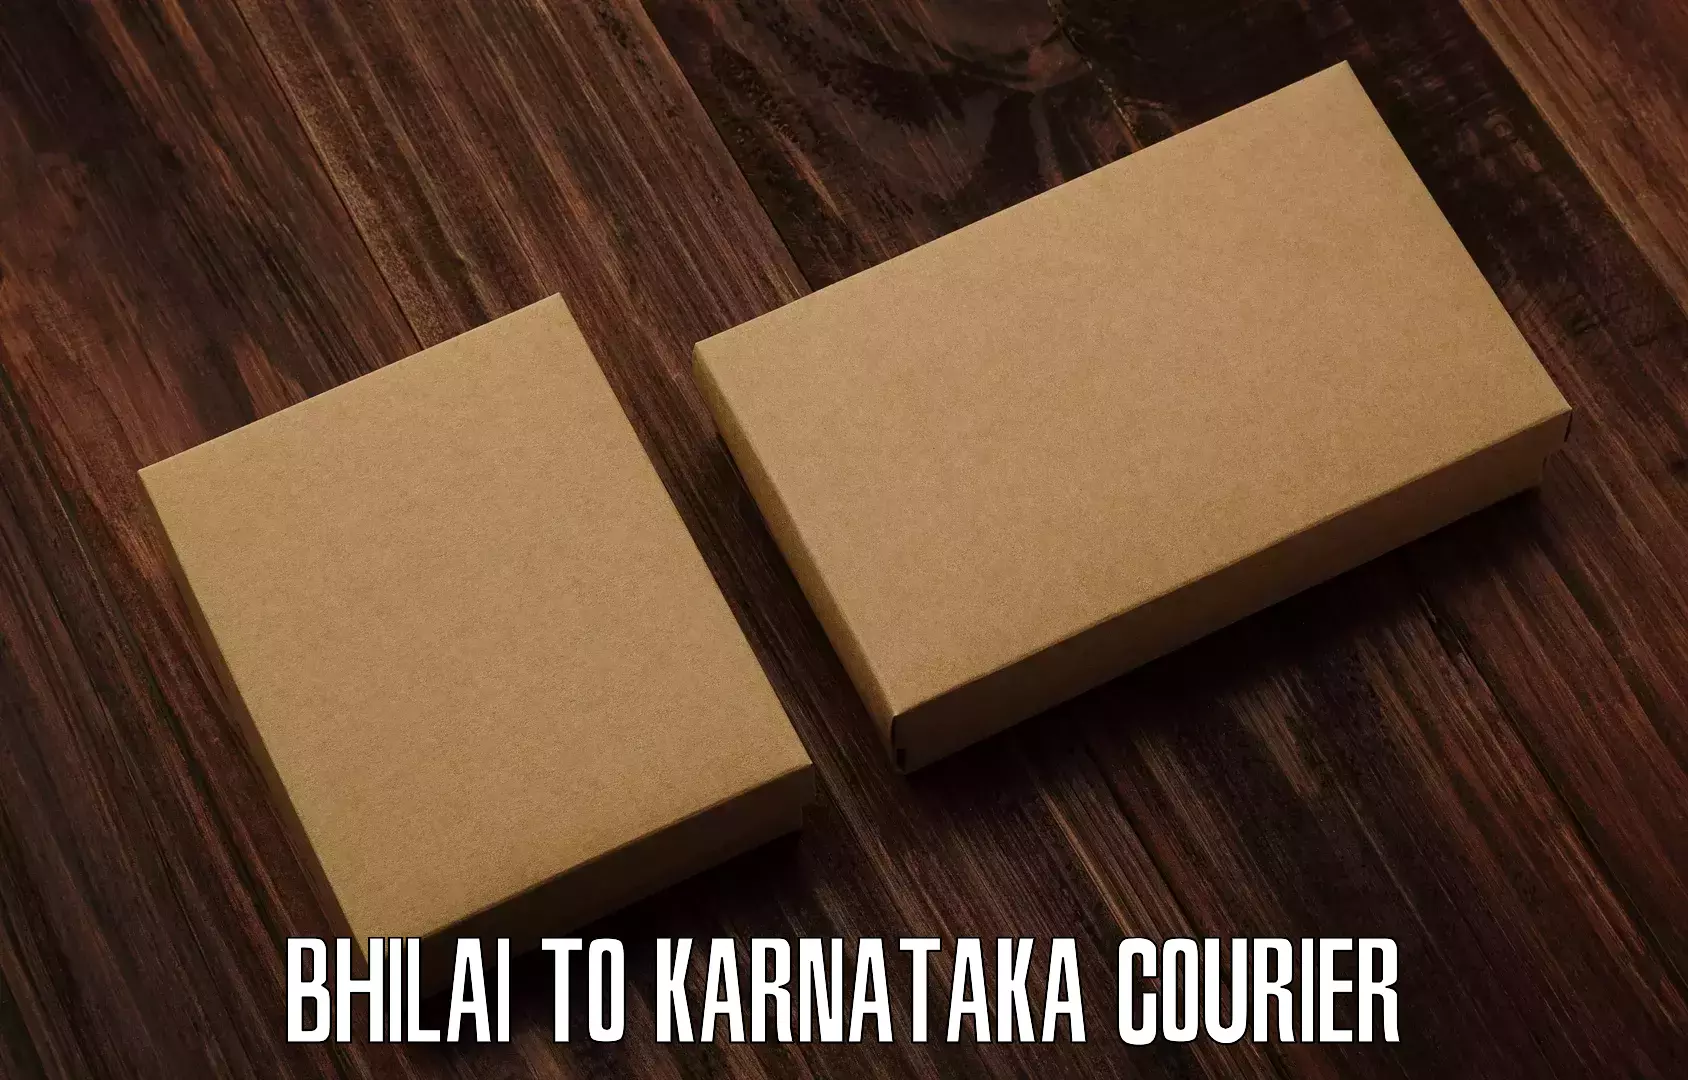 Delivery service partnership Bhilai to Karnataka